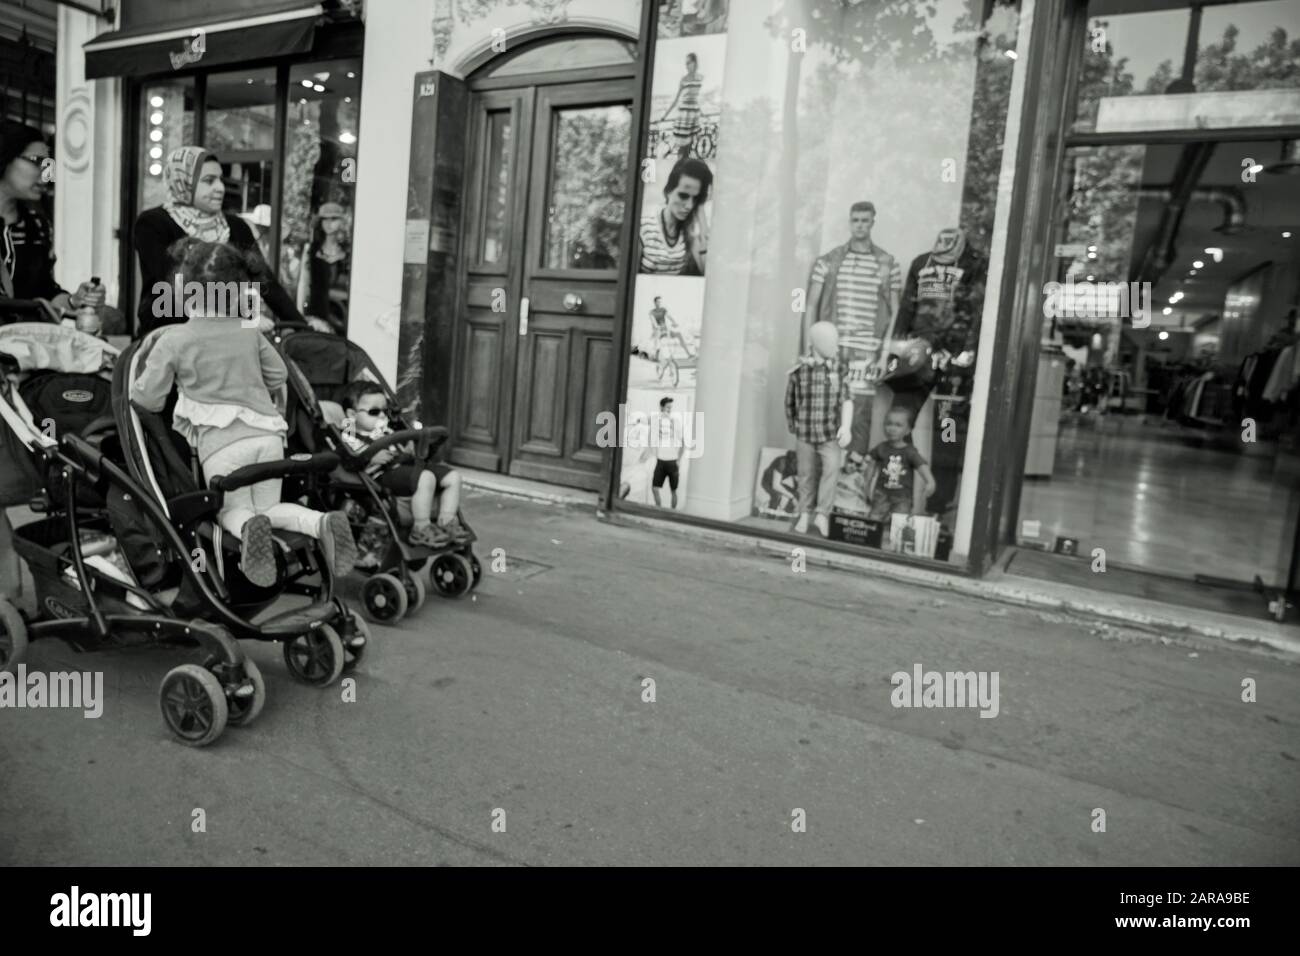 Kids in prams, Fashion garments shop window, Paris, France, Europe Stock Photo